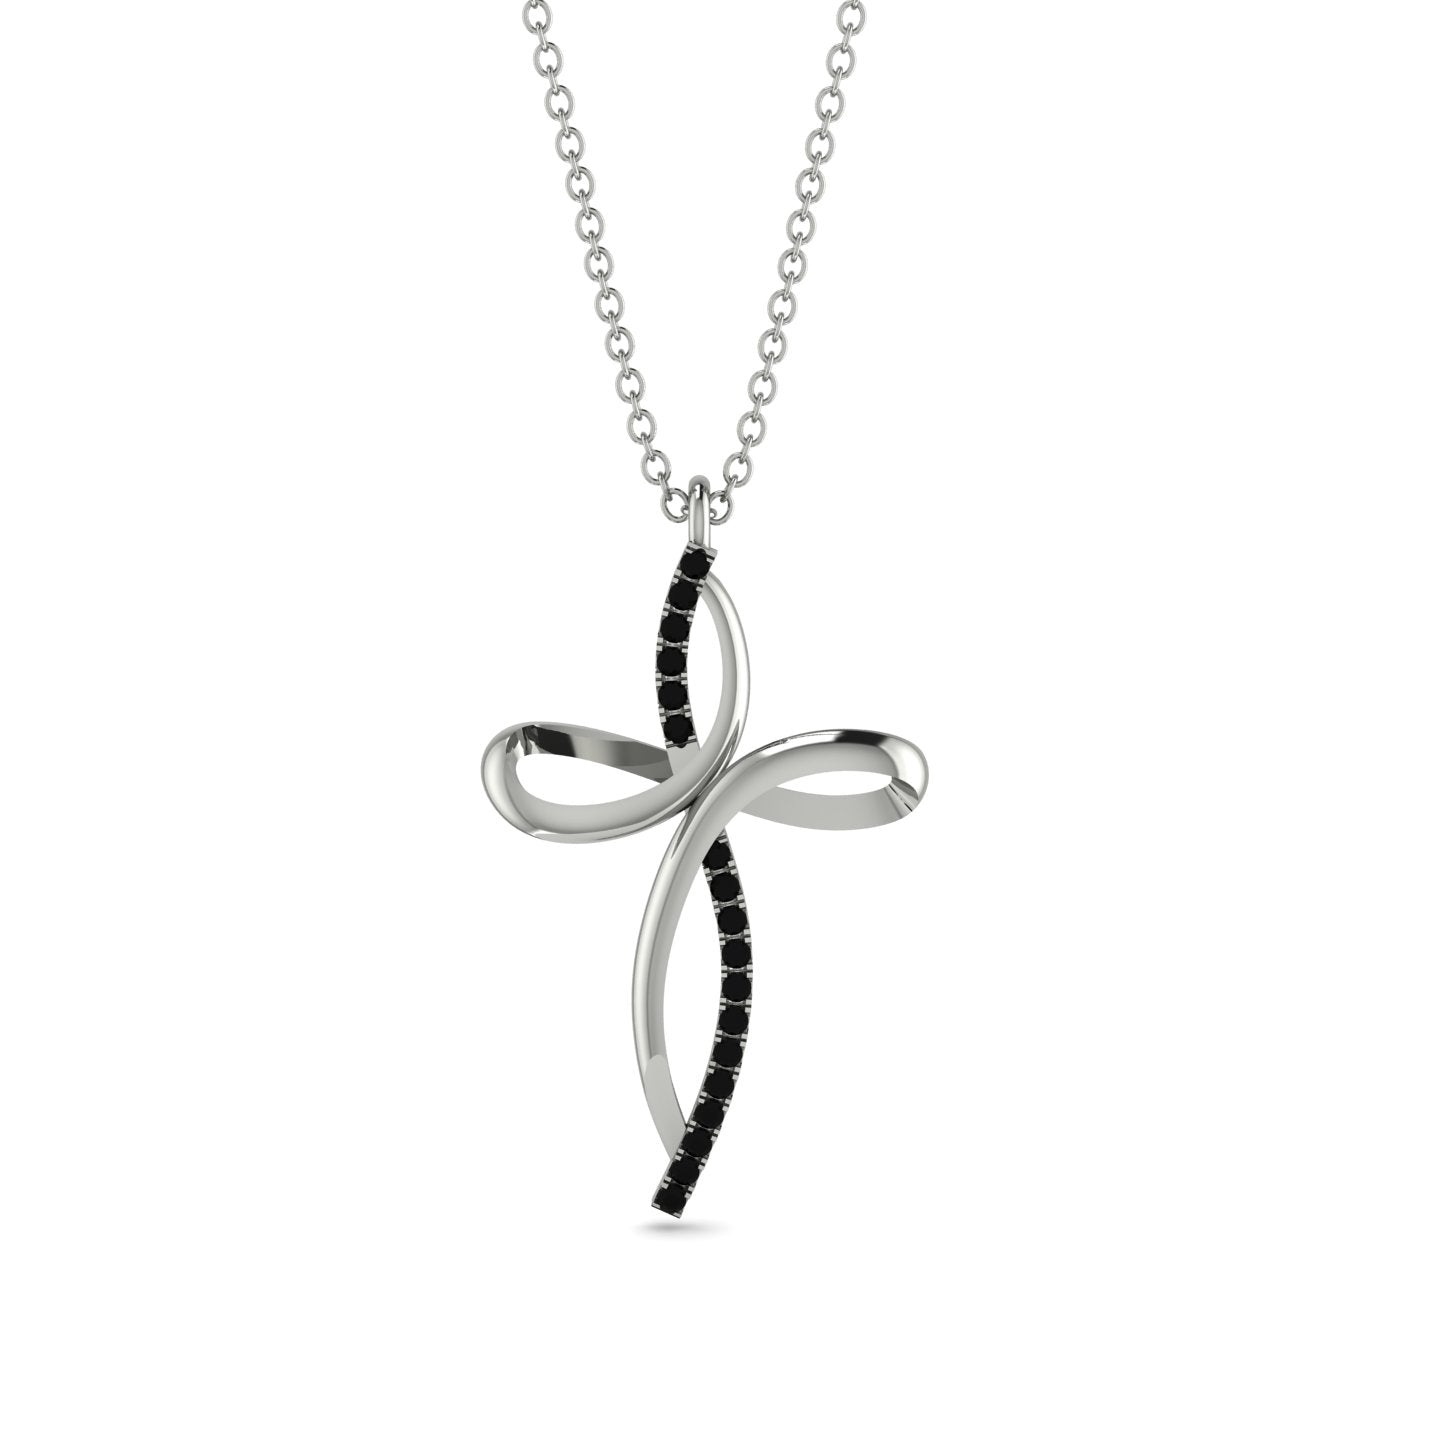 Unique Black Diamond Swirling Cross Necklace - Arthur No. 9